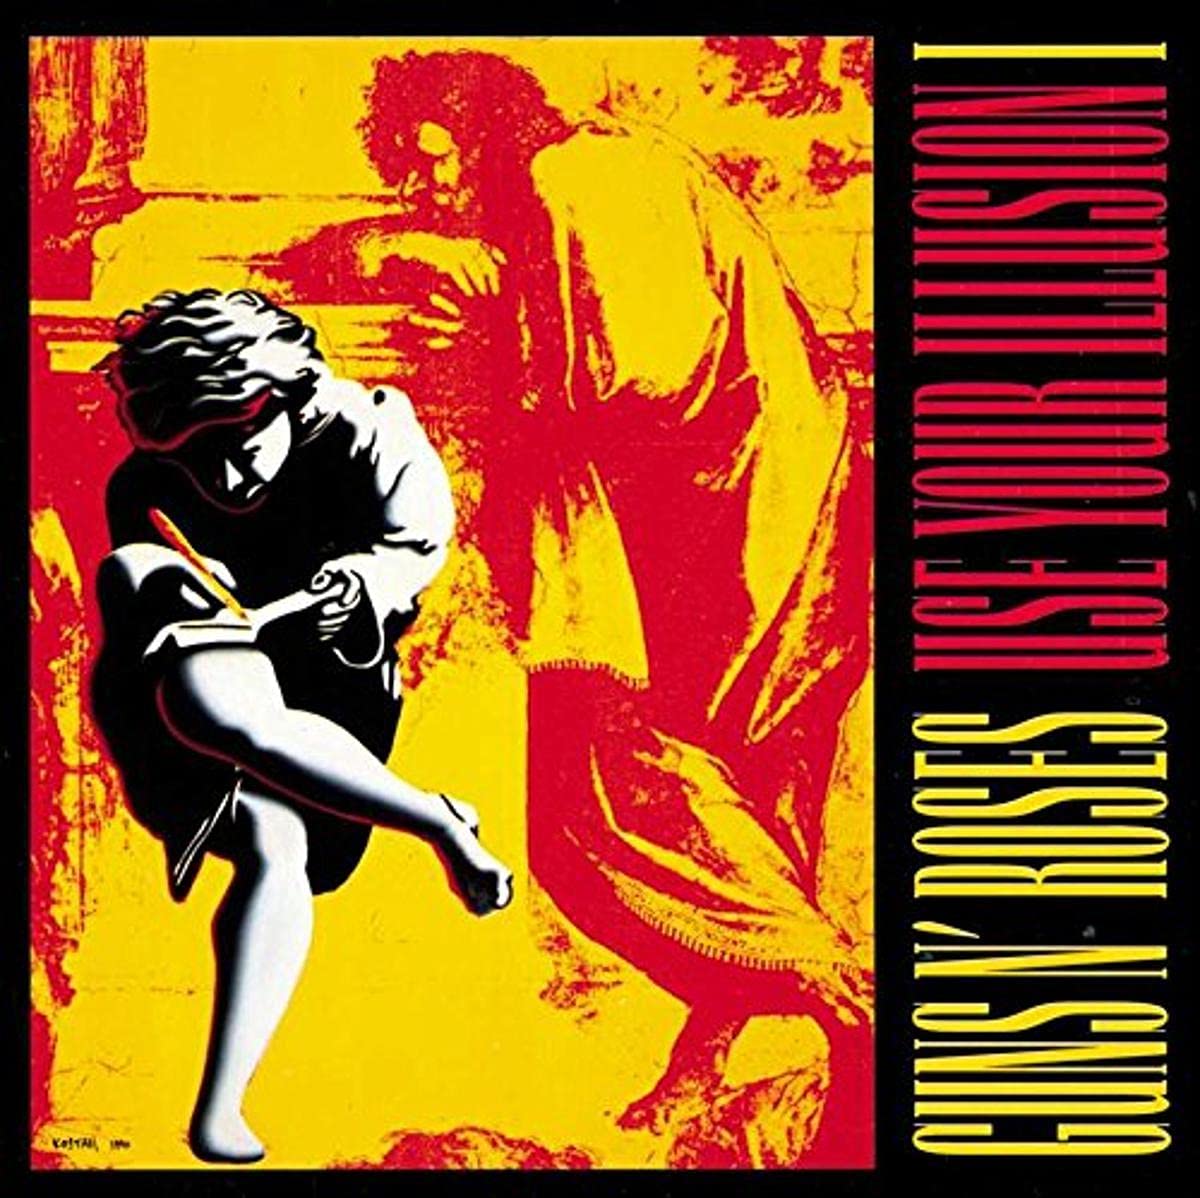 Guns N Roses - Use Your Illusion 1 - 2 x LP